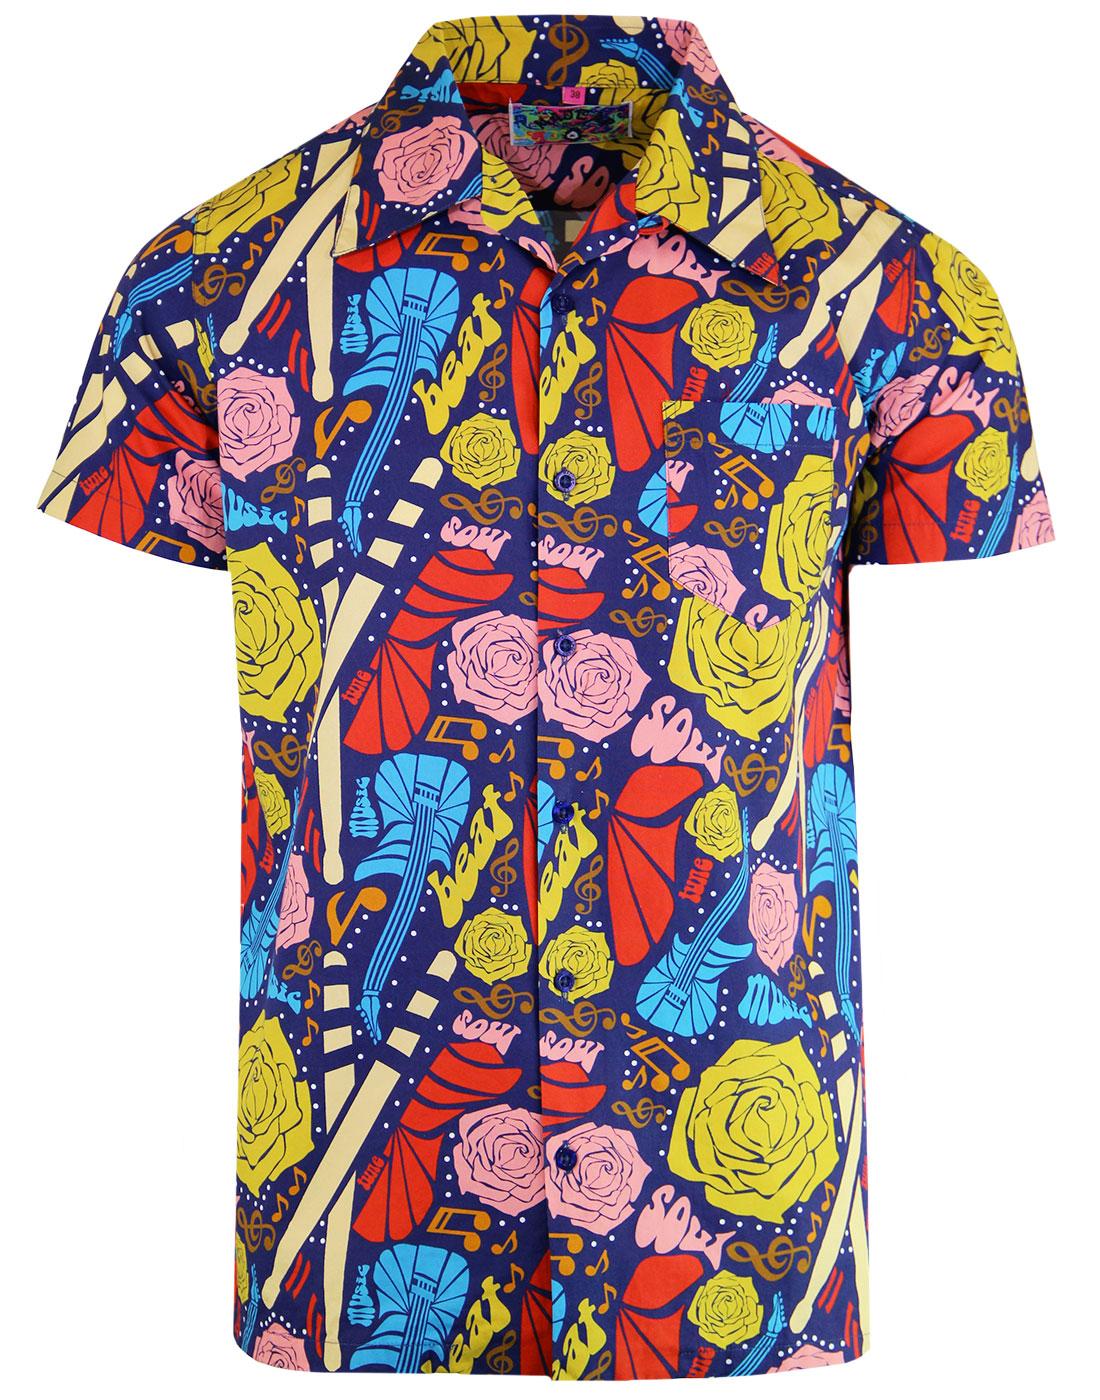 Resort Wear Retro Shirt M Aloha Shirt Tropical Shirt Tiki Shirt Vintage 80s Polyester Hawaiian Shirt Floral Shirt Rockabilly Shirt